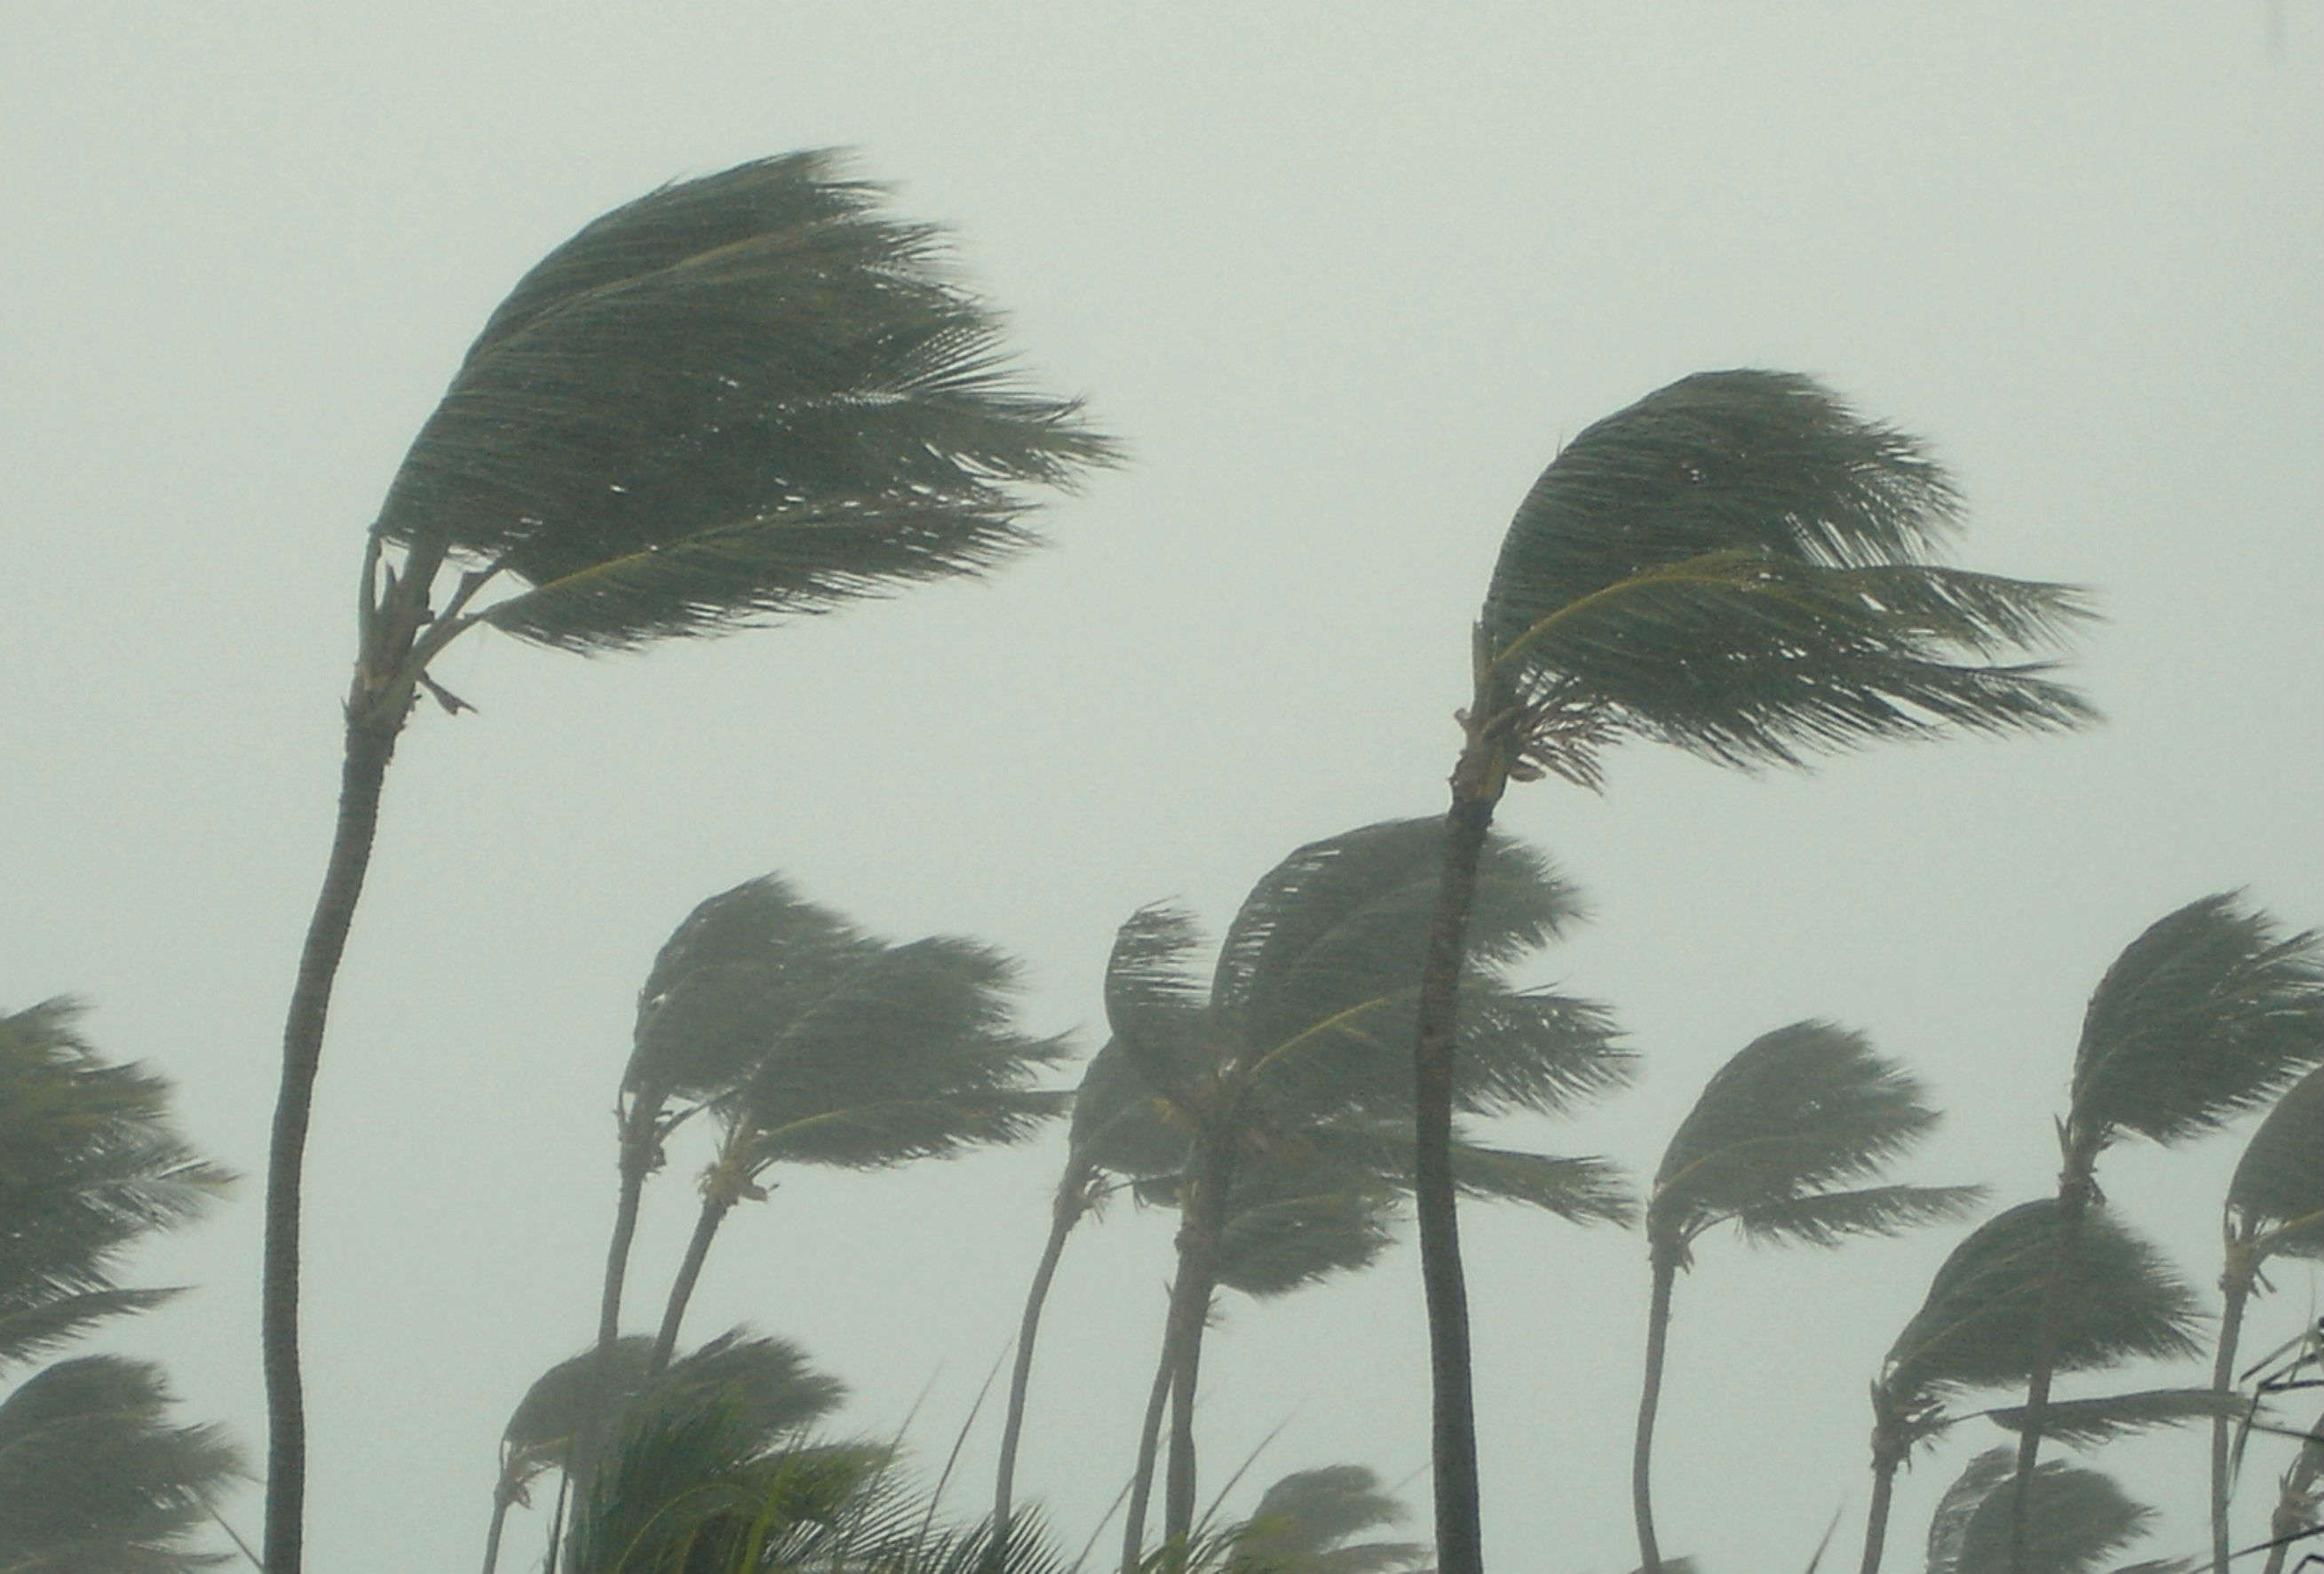 Cyclone in Odisha – travel advisory